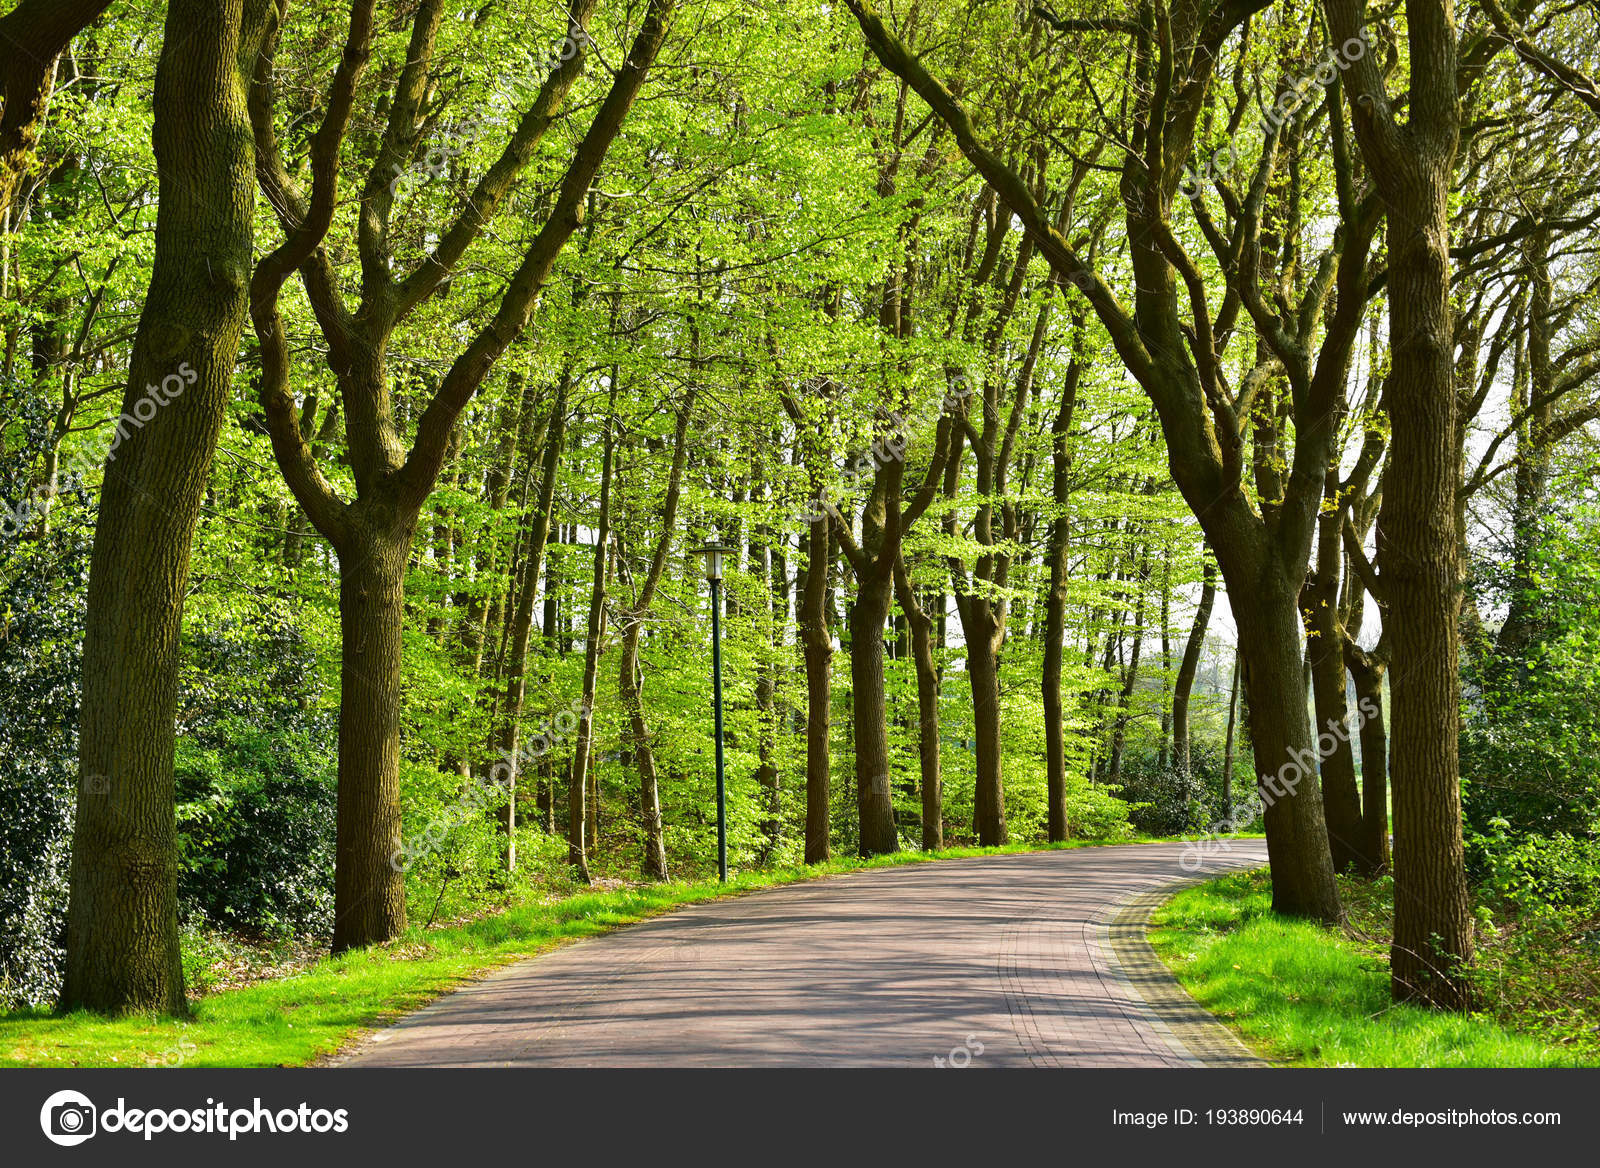 depositphotos_193890644-stock-photo-lane-oak-trees-dutch-province.jpg